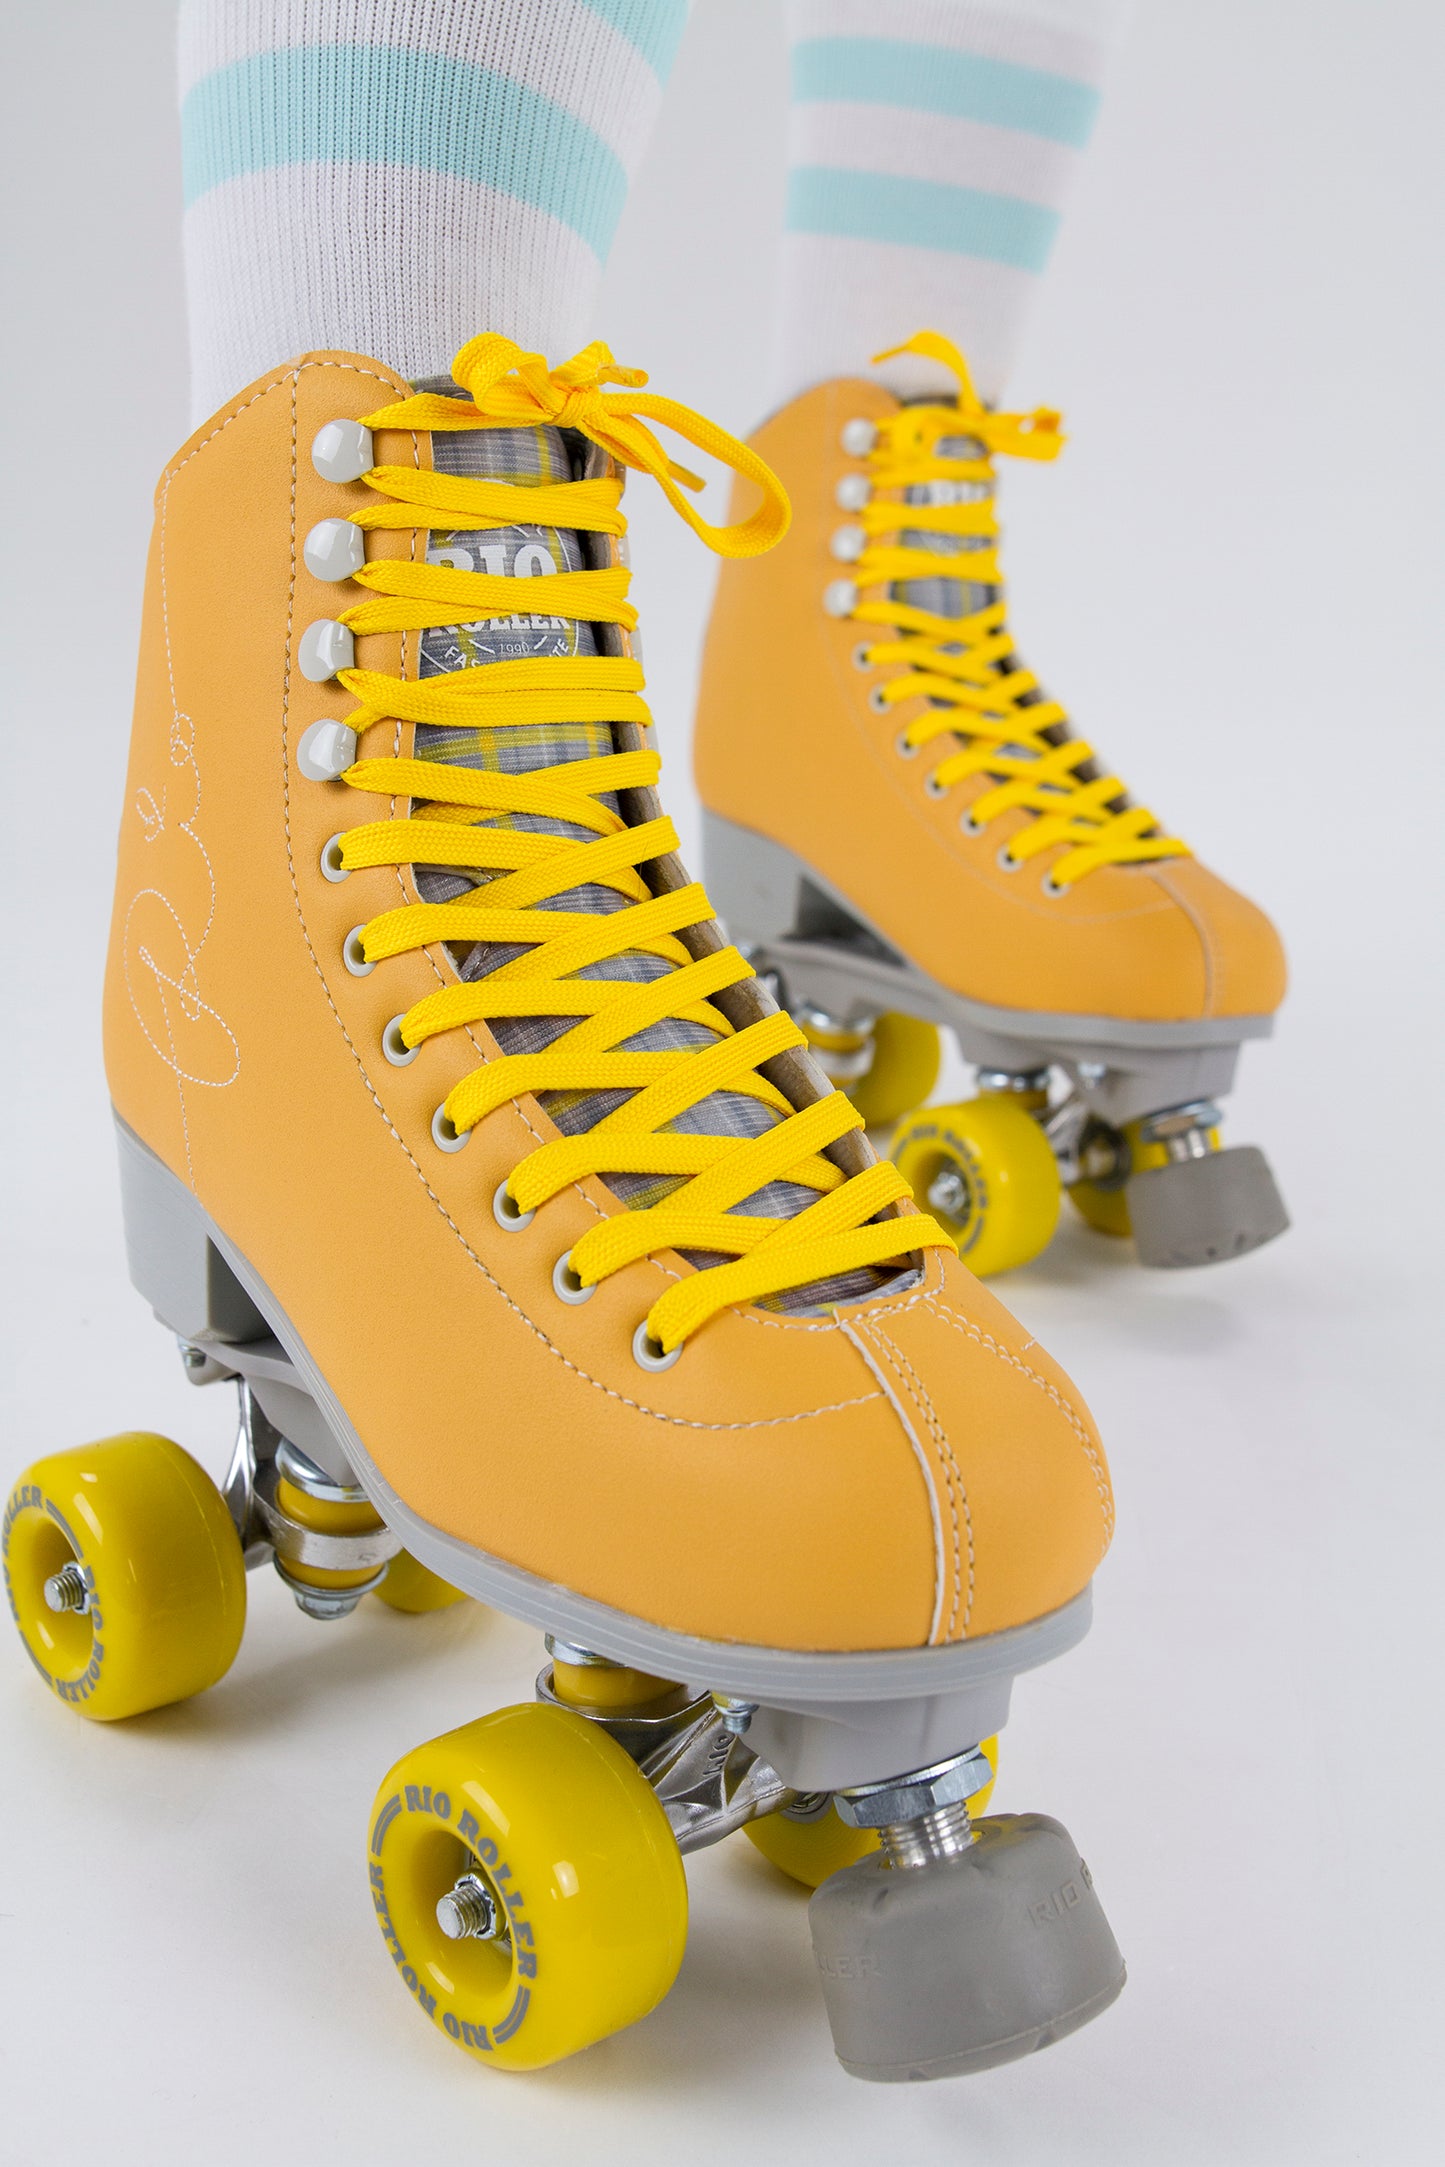 Rio Roller Signature Quad Skates - Yellow - Momma Trucker Skates